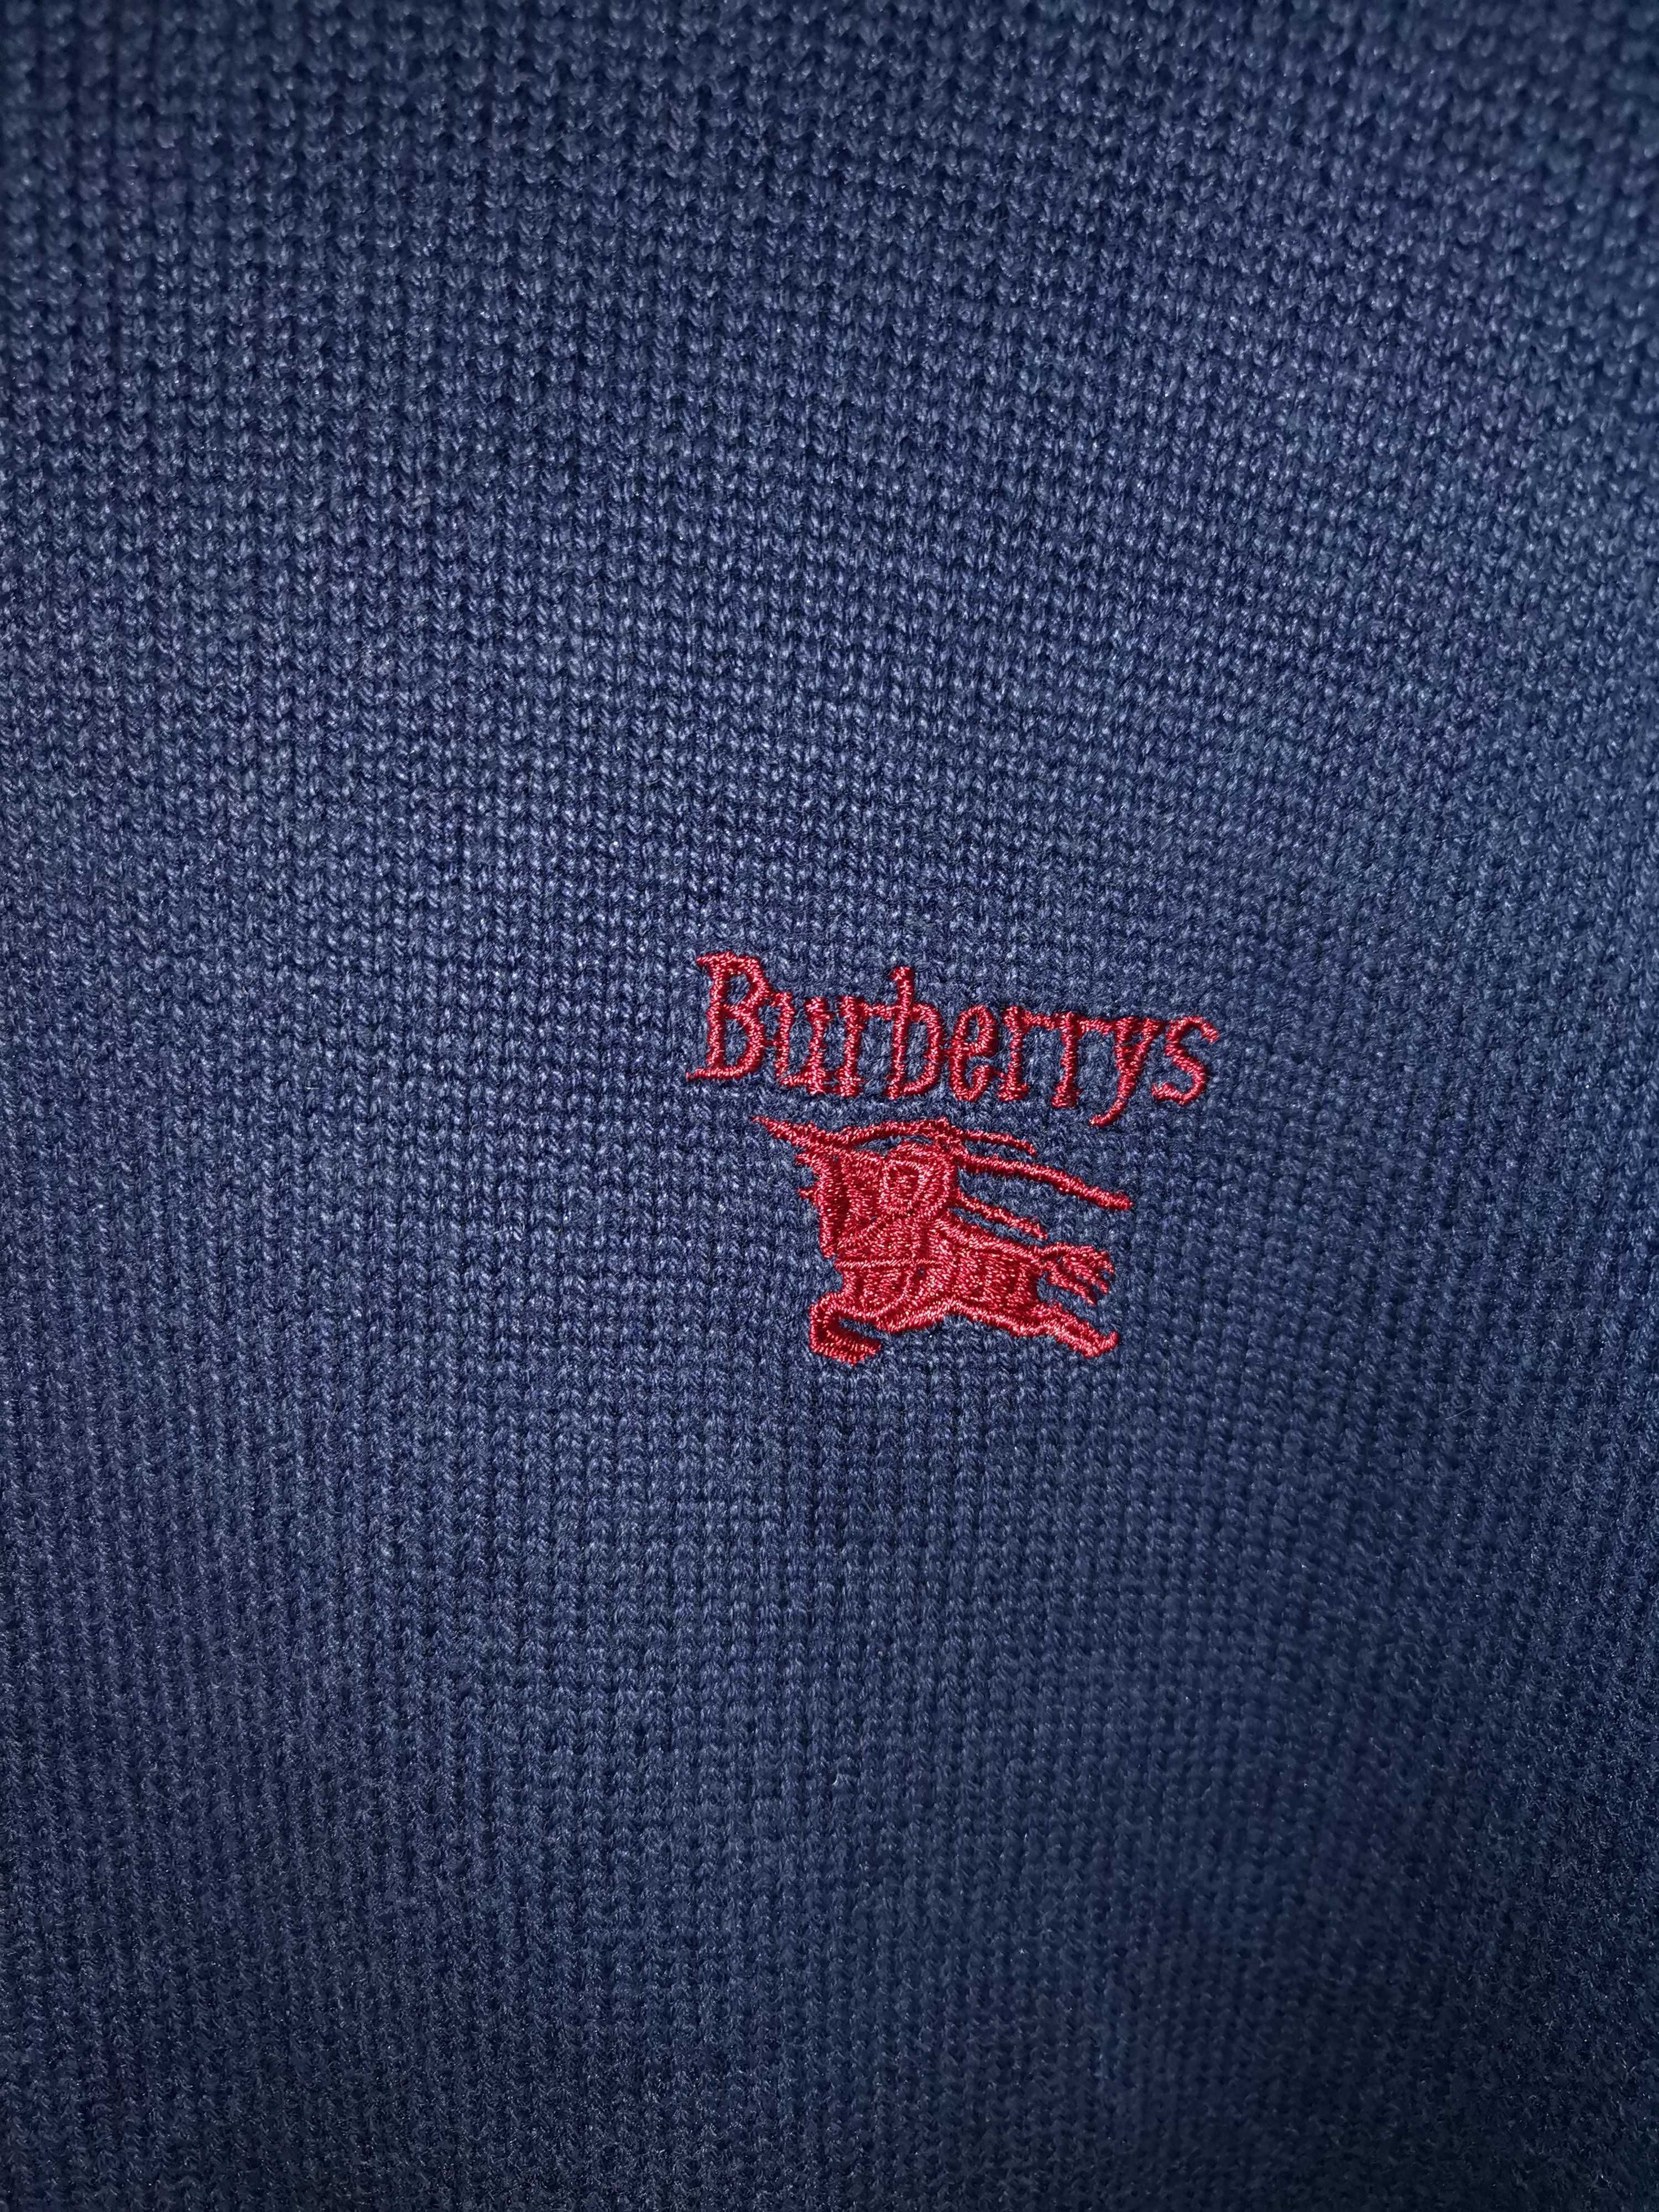 Camisola de malha vintage Burberry's